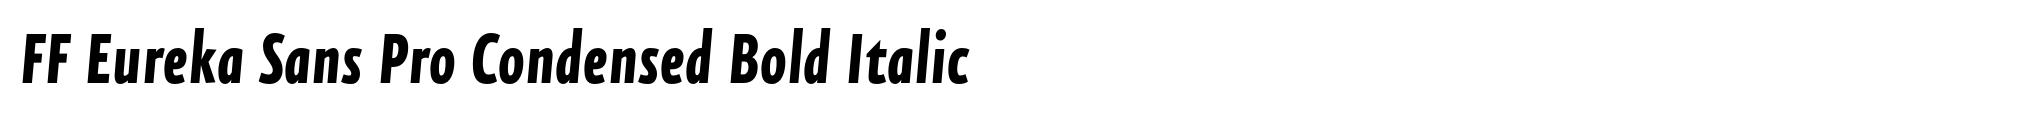 FF Eureka Sans Pro Condensed Bold Italic image